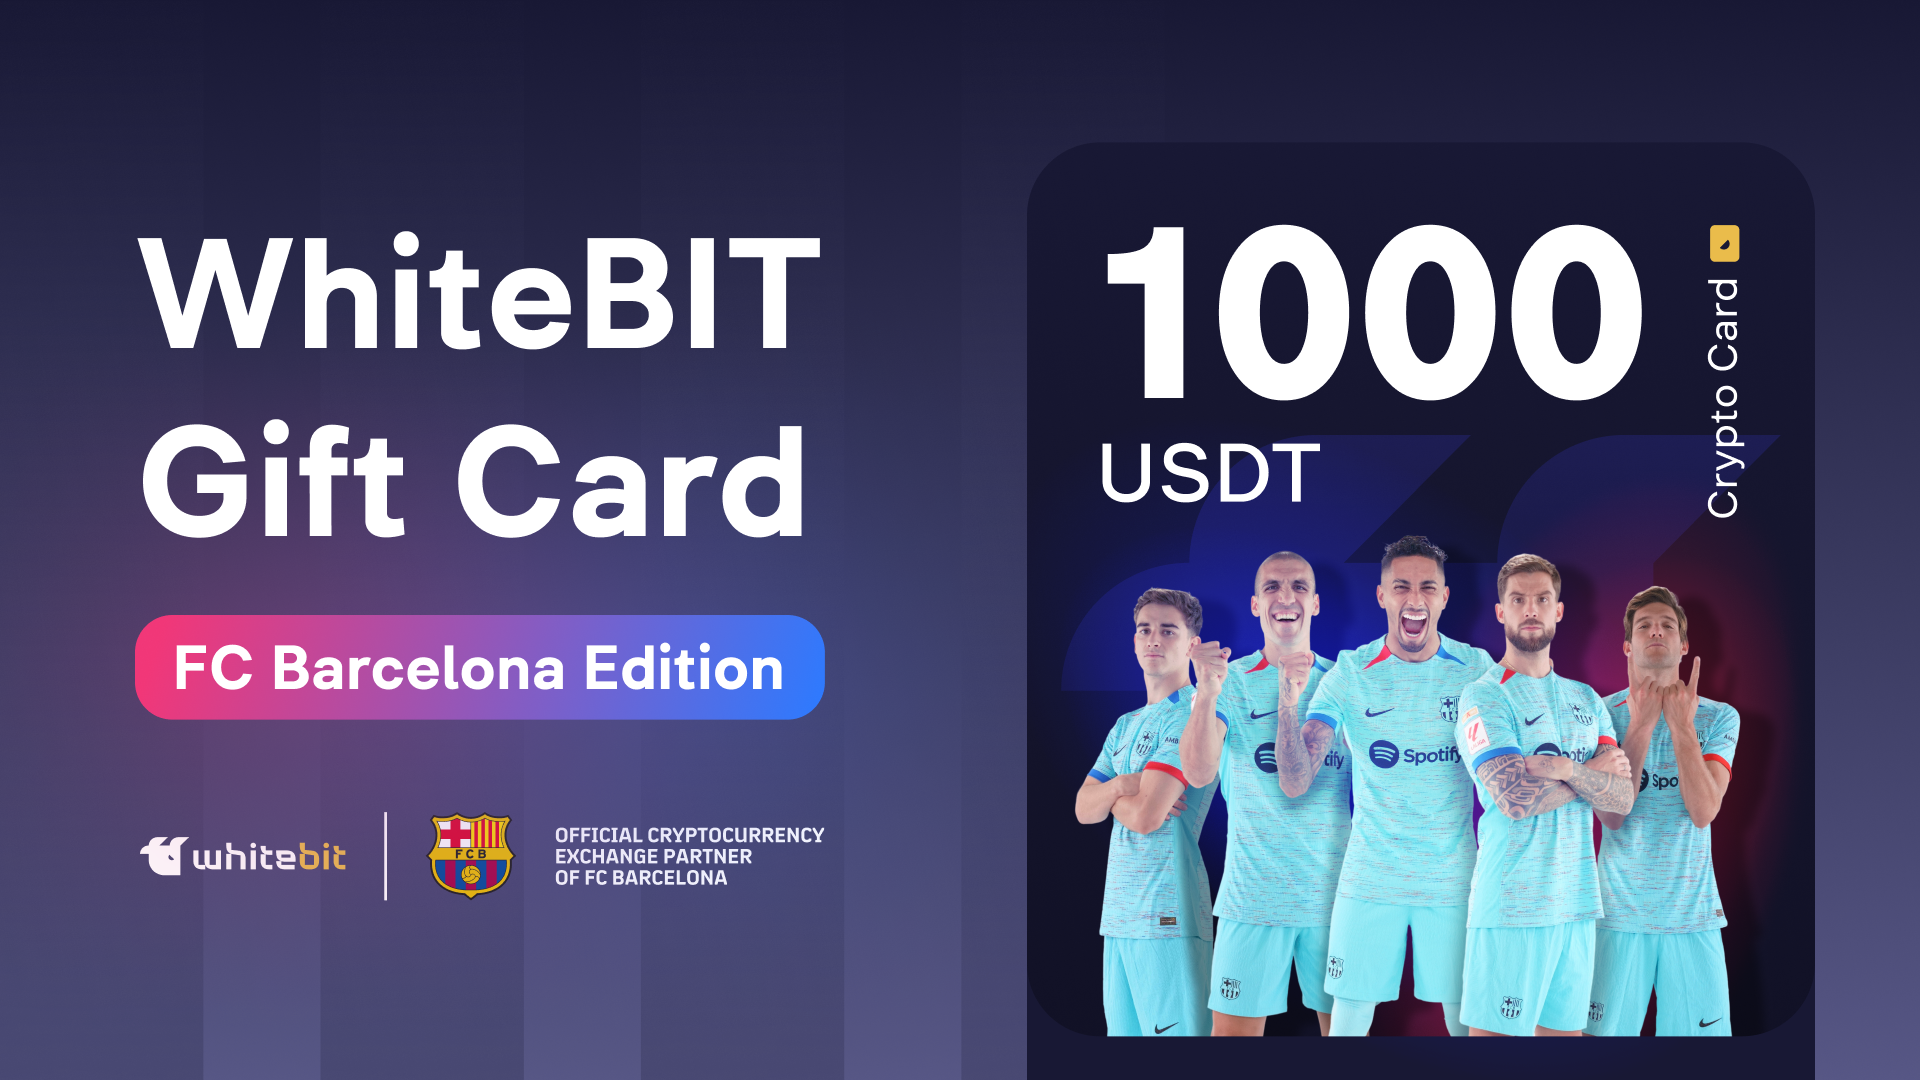 WhiteBIT - FC Barcelona Edition - 1000 USDT Gift Card